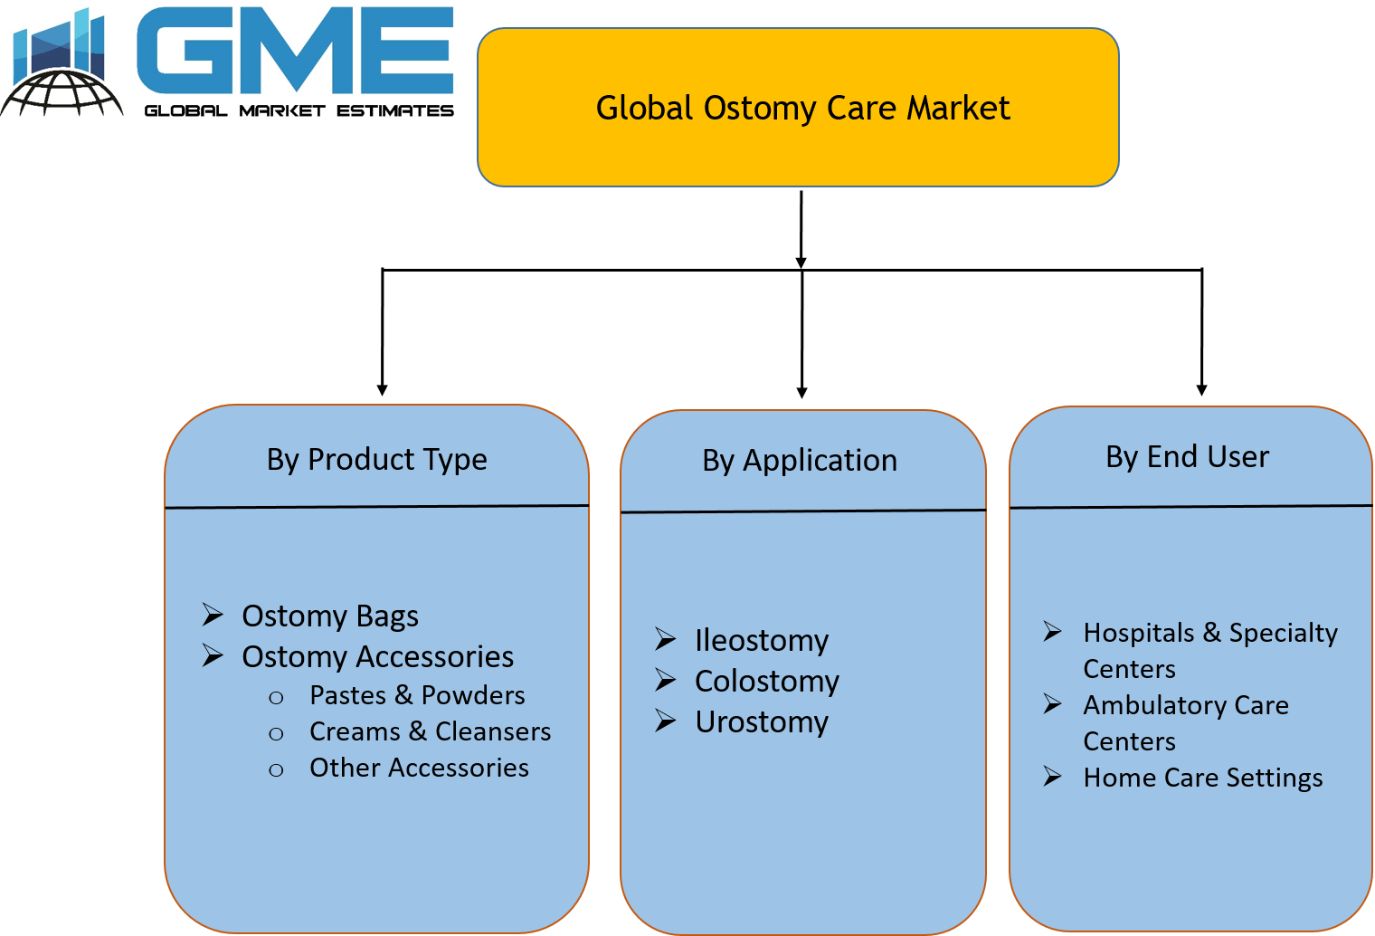 Global Ostomy Care Market Segmentation